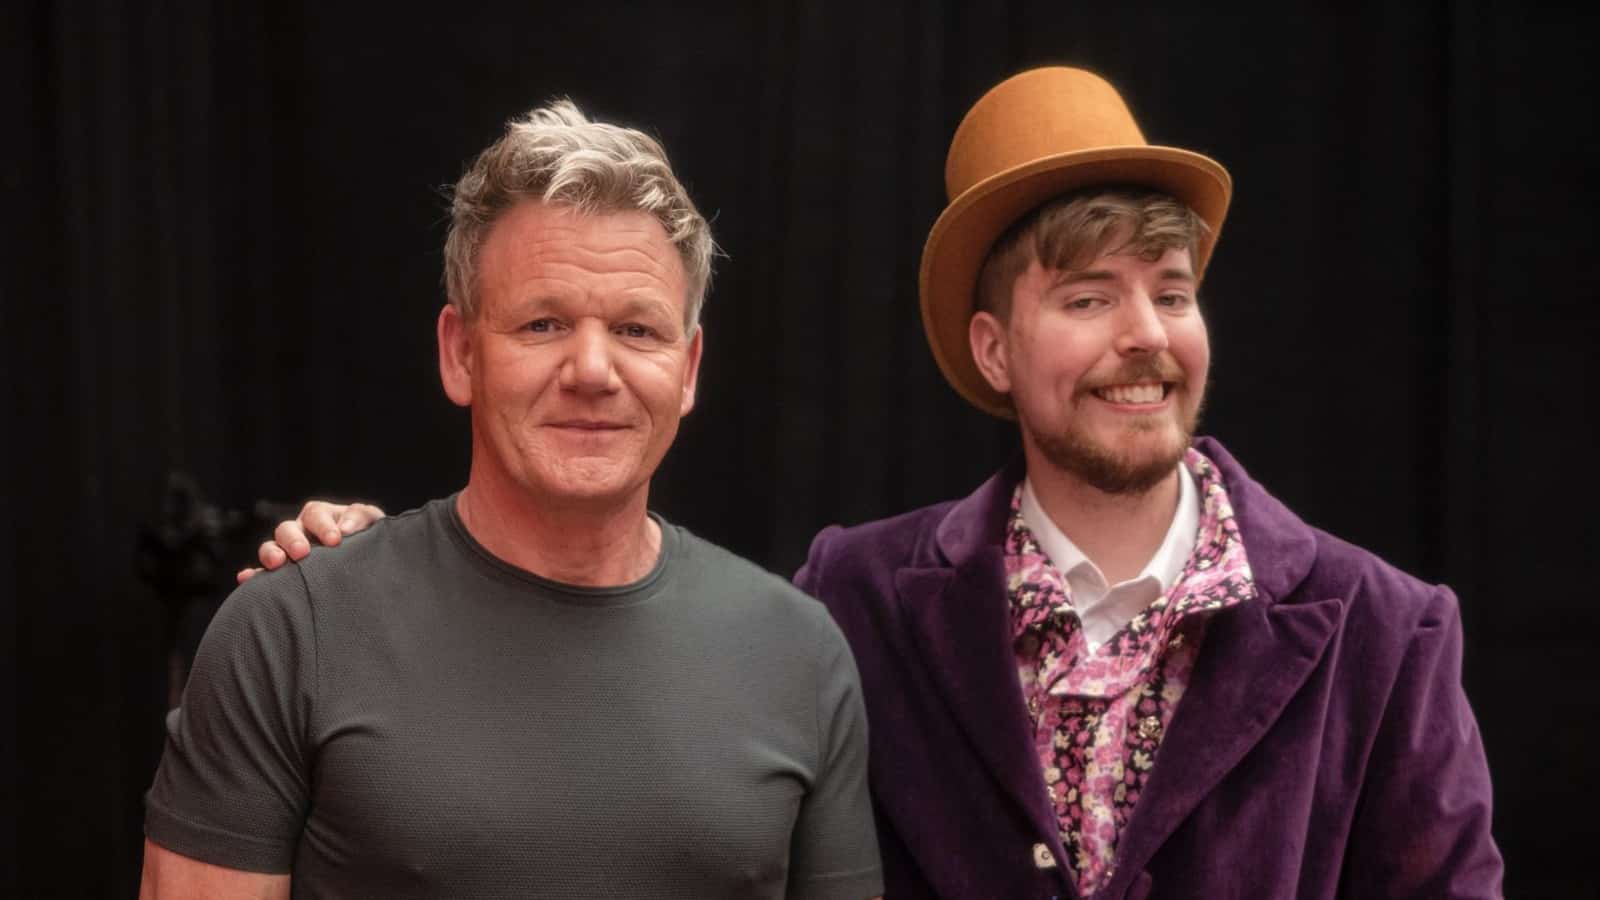 Gordon Ramsay standing next to MrBeast dressed as Willy Wonka